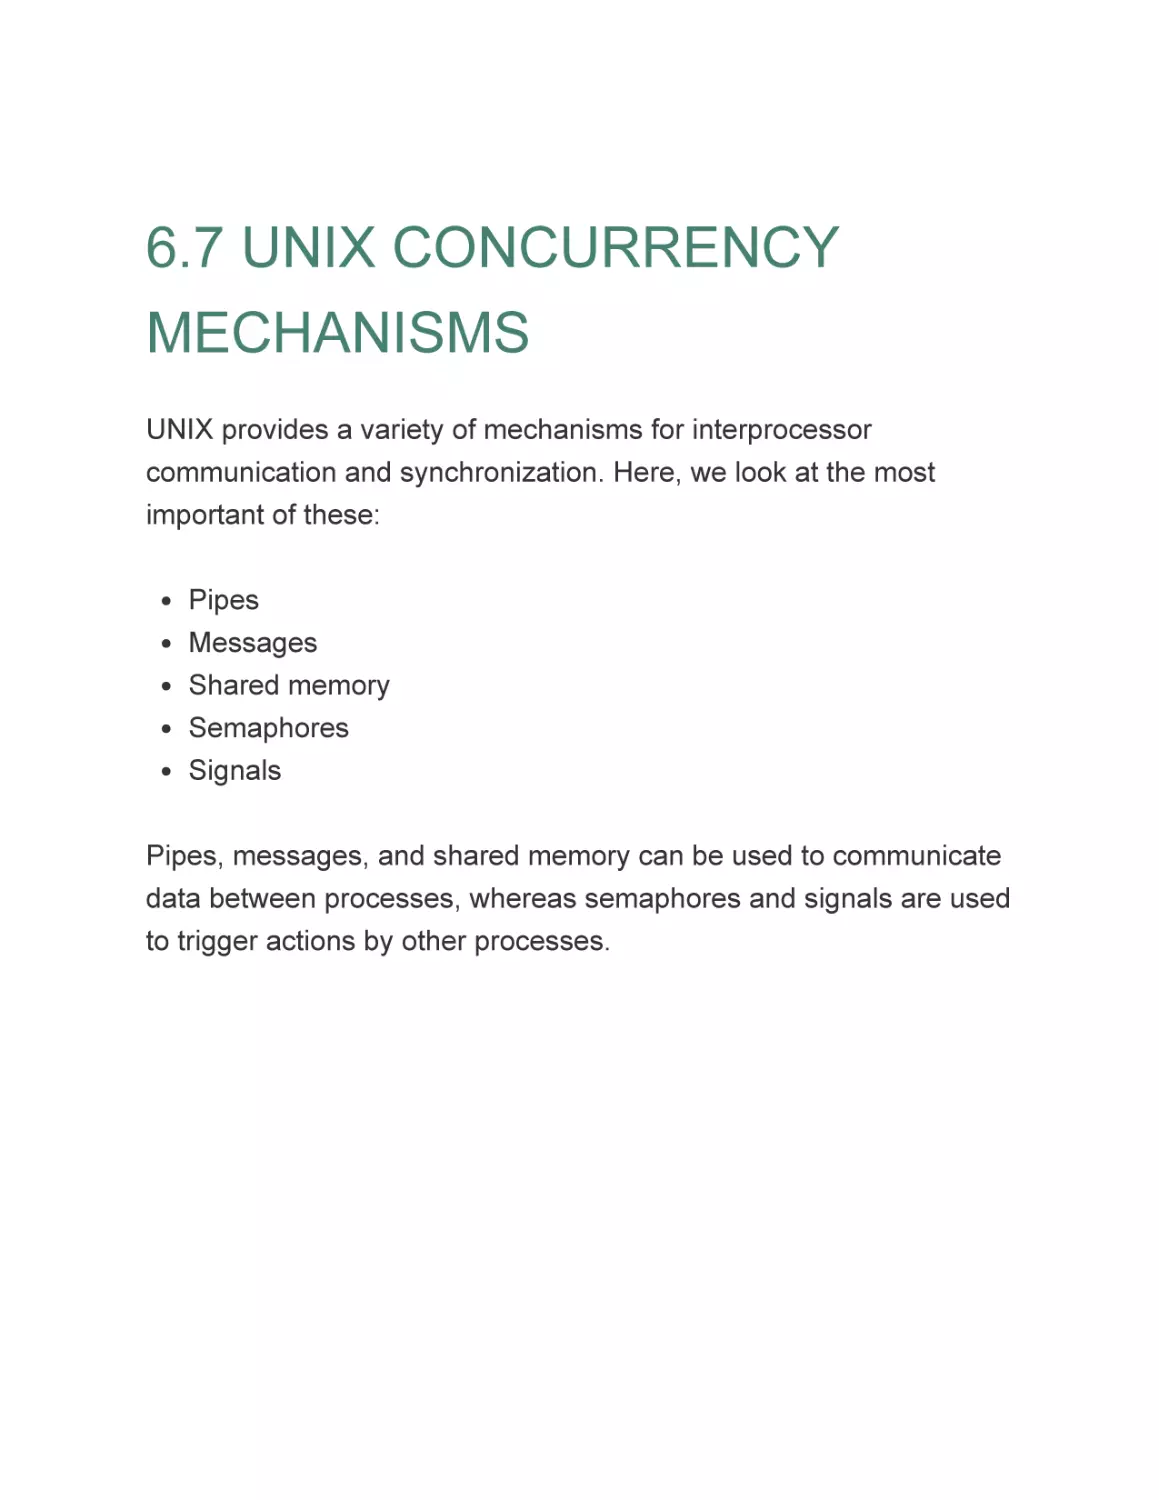 6.7 UNIX CONCURRENCY MECHANISMS